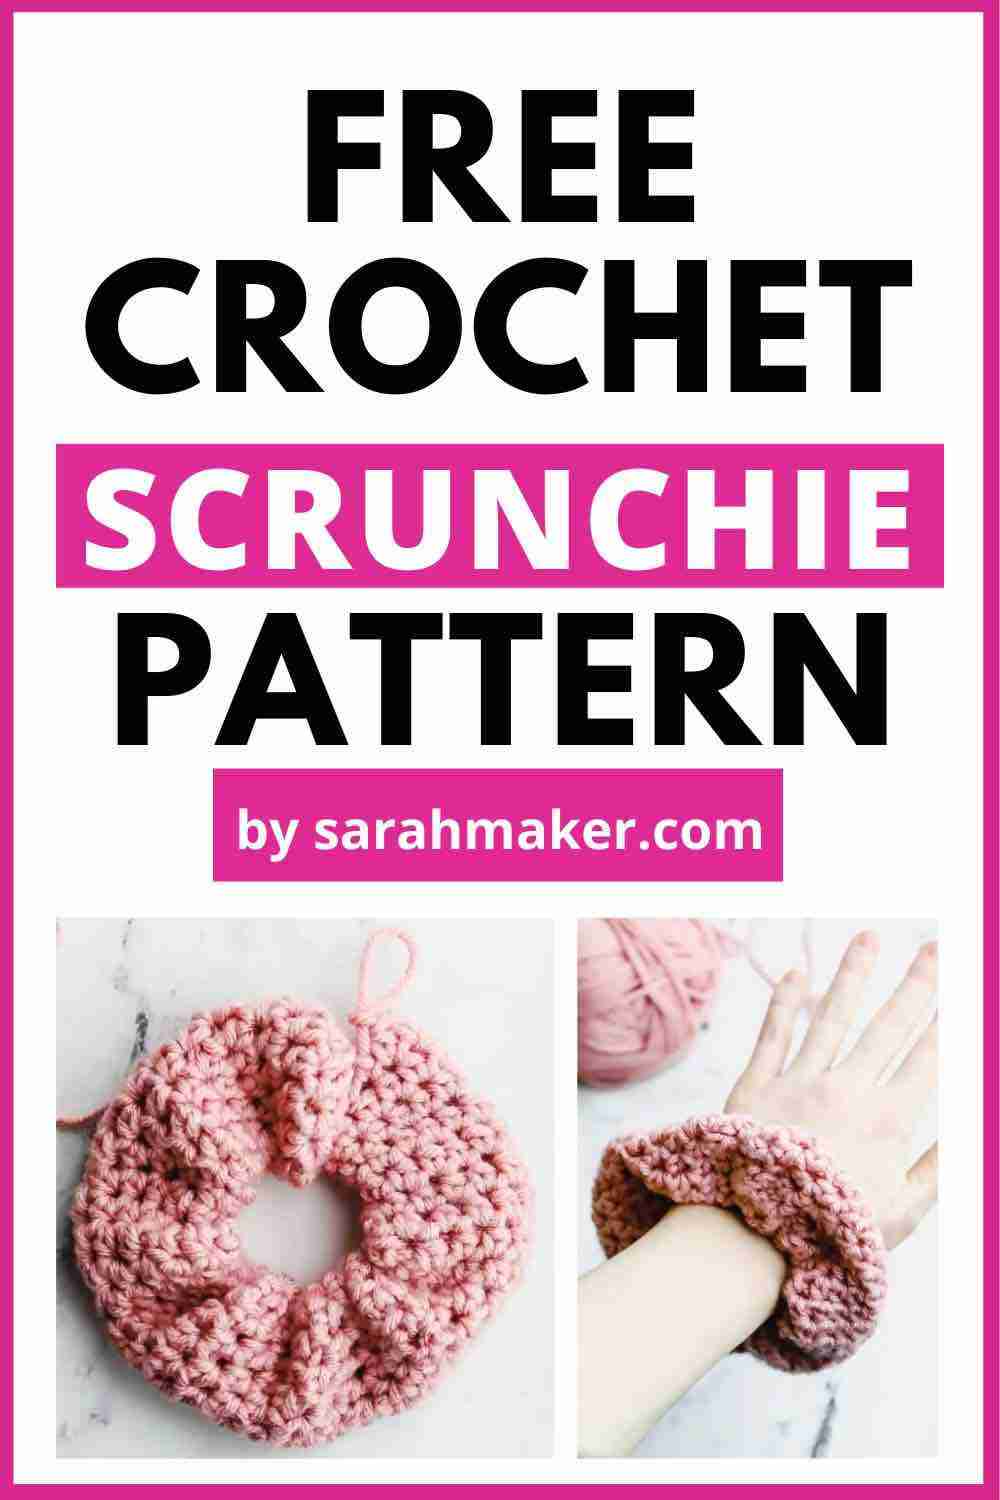 Free-Crochet-Scrunchie-Pattern-sarah-maker